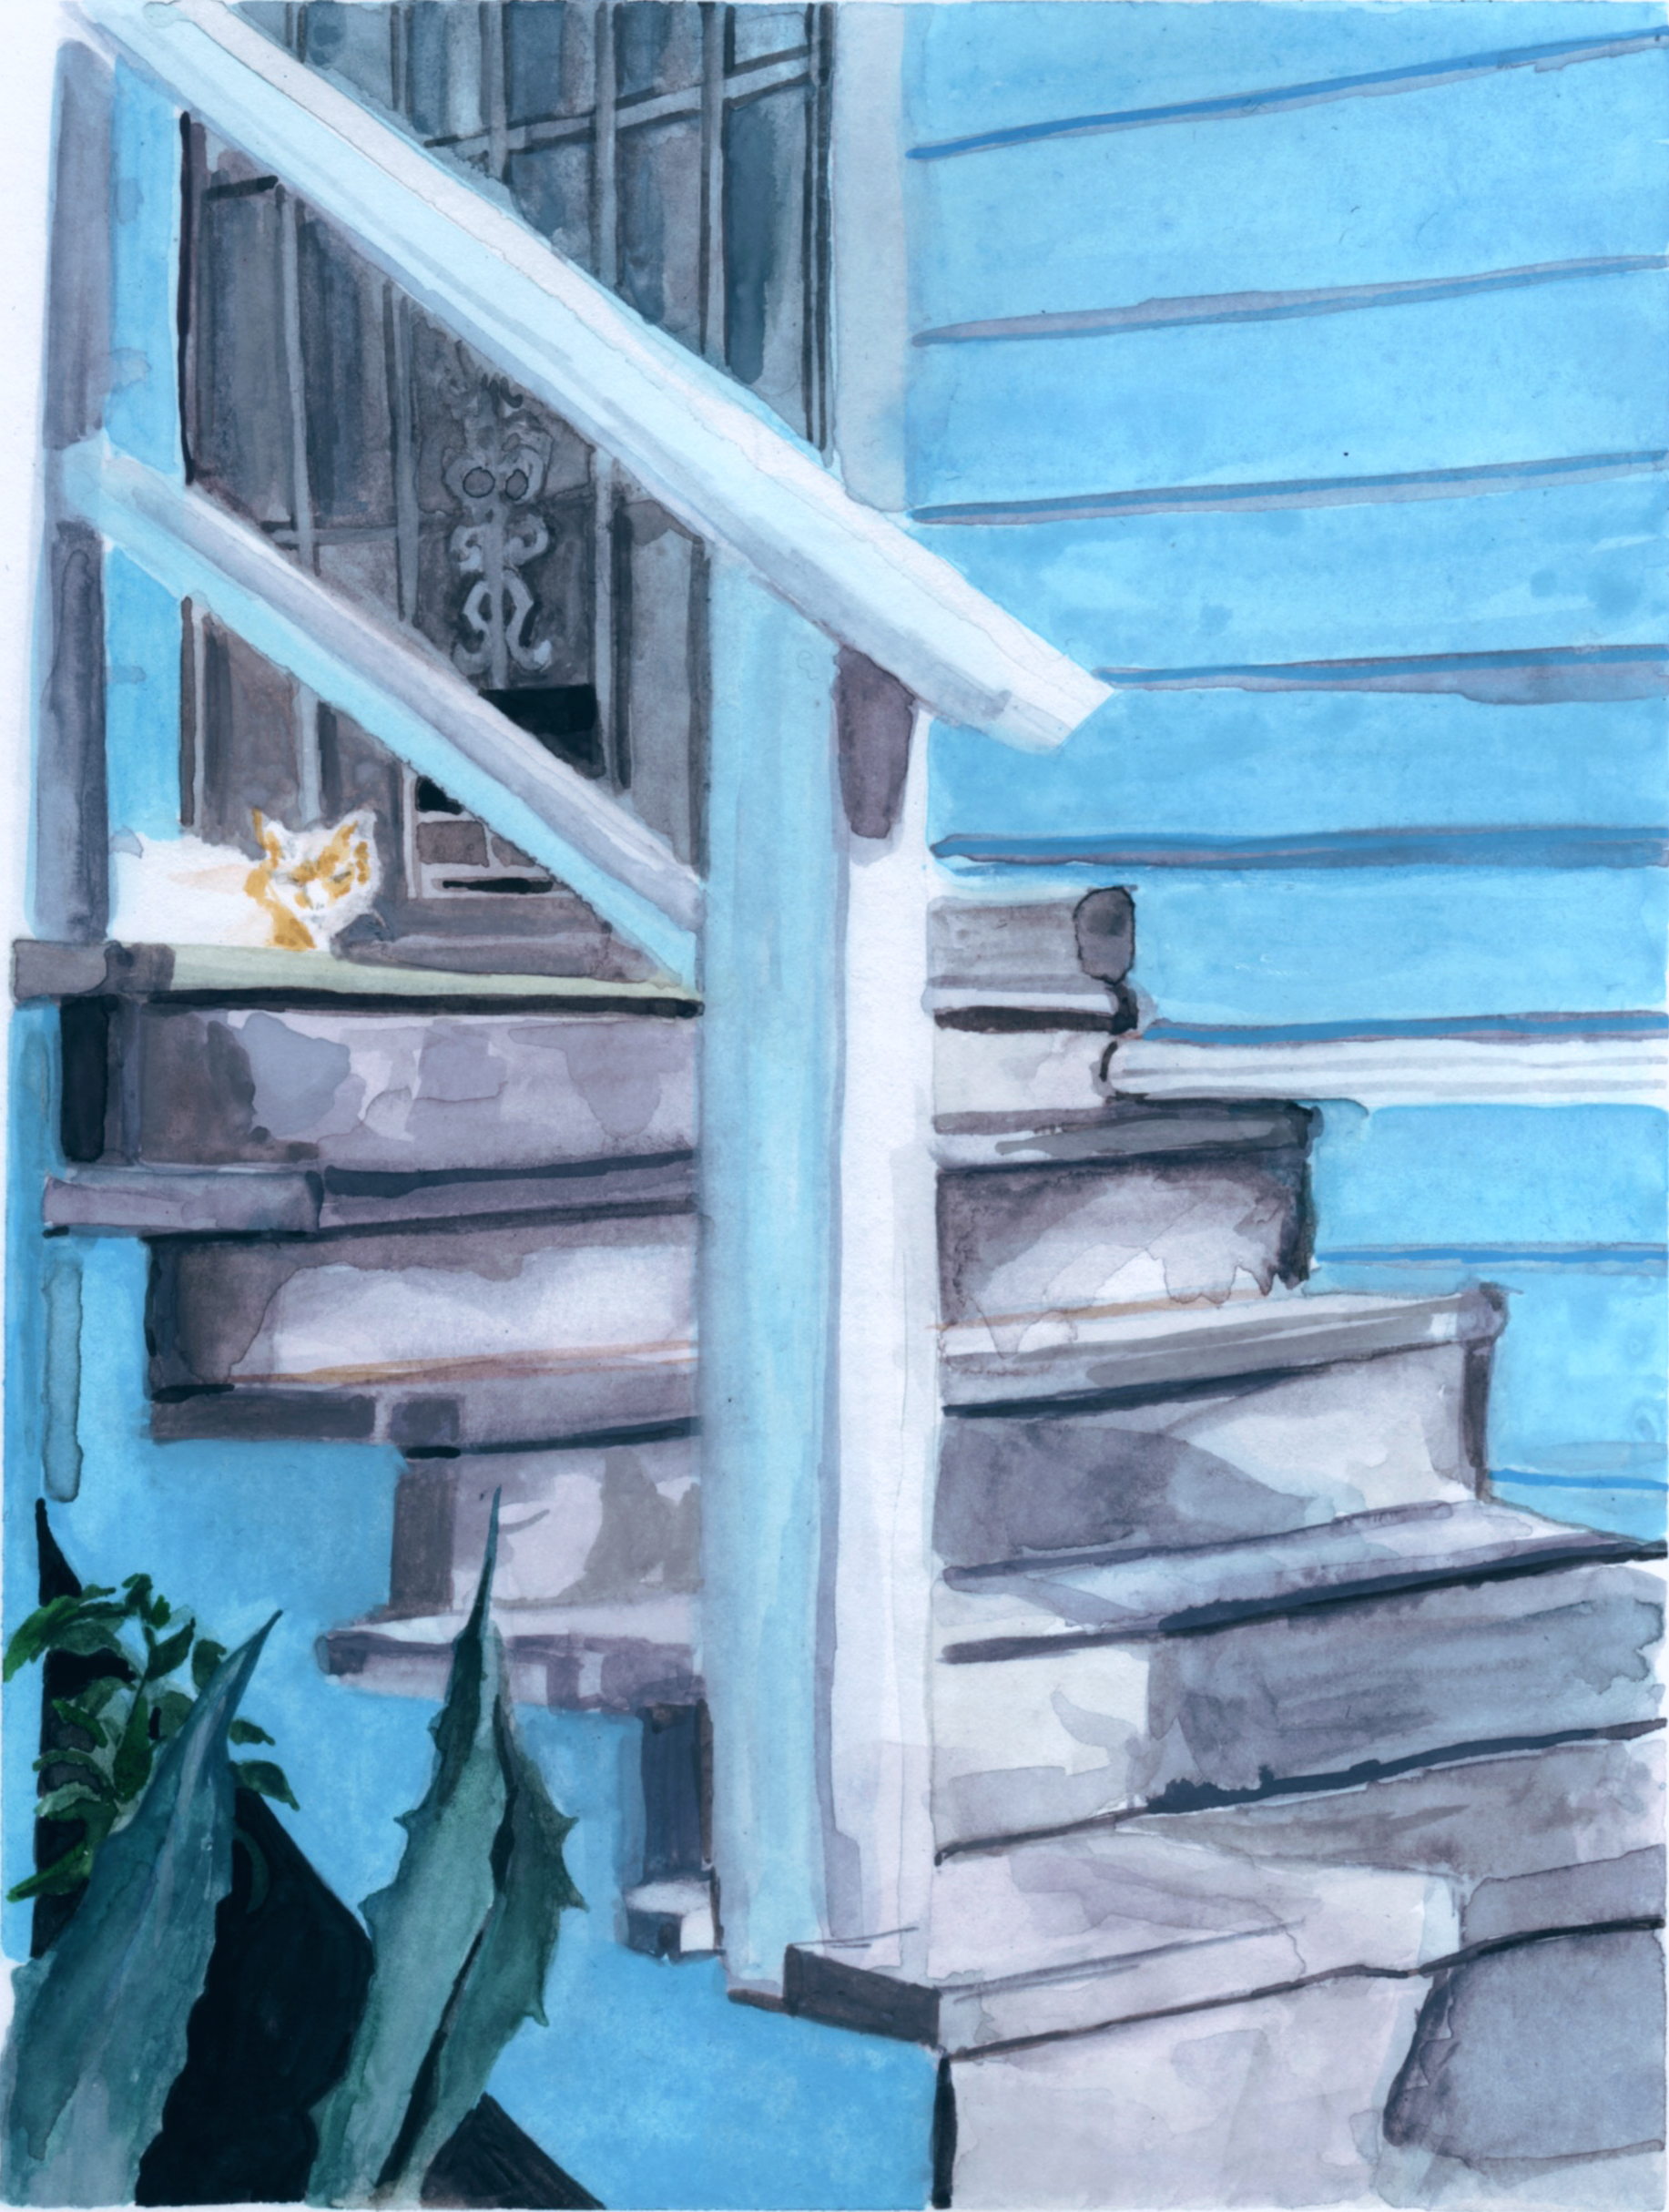 Porch Cat 1 (Blue House On Corner)